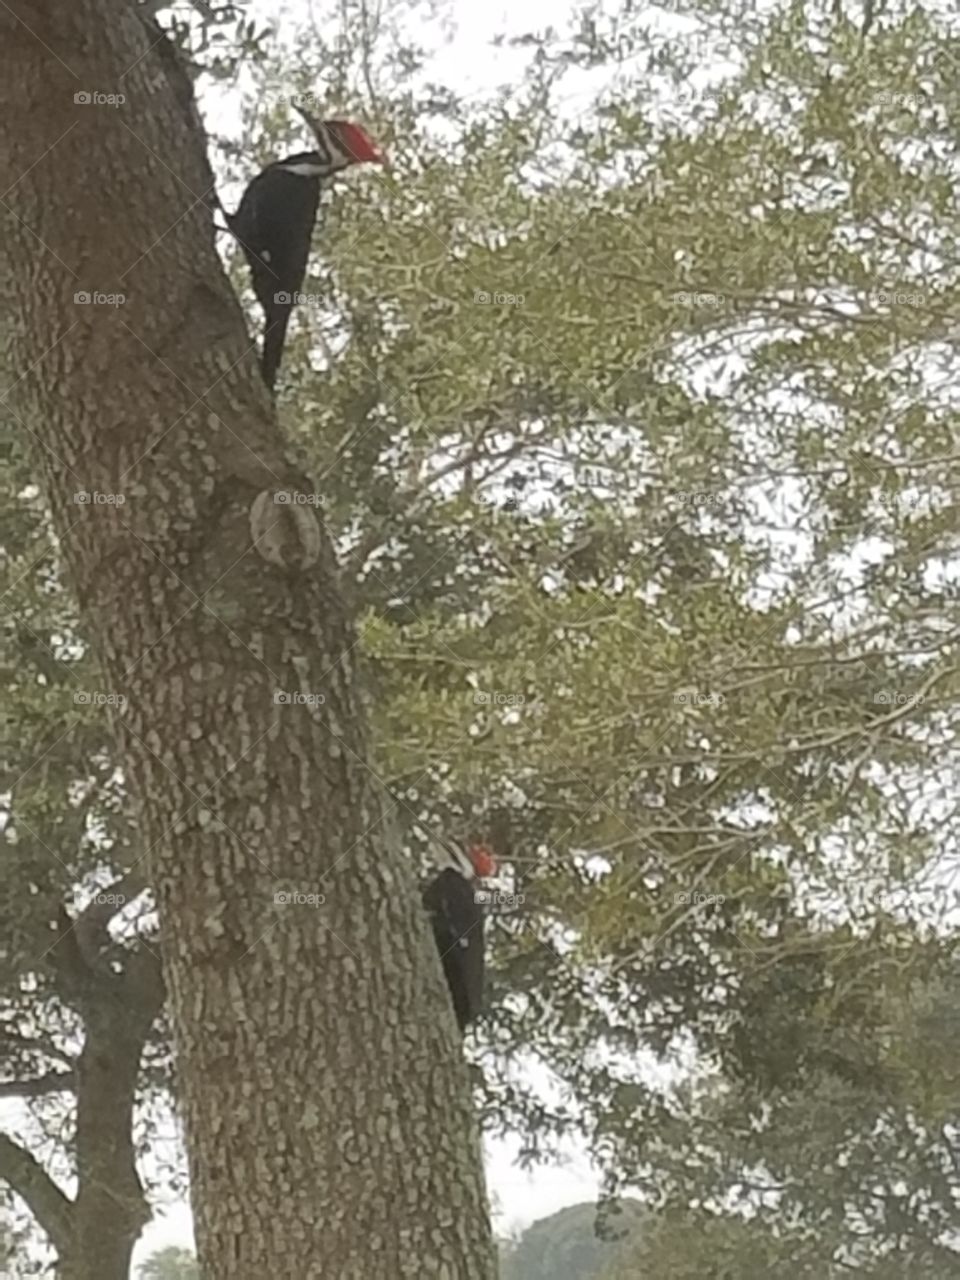 2 woodpeckers